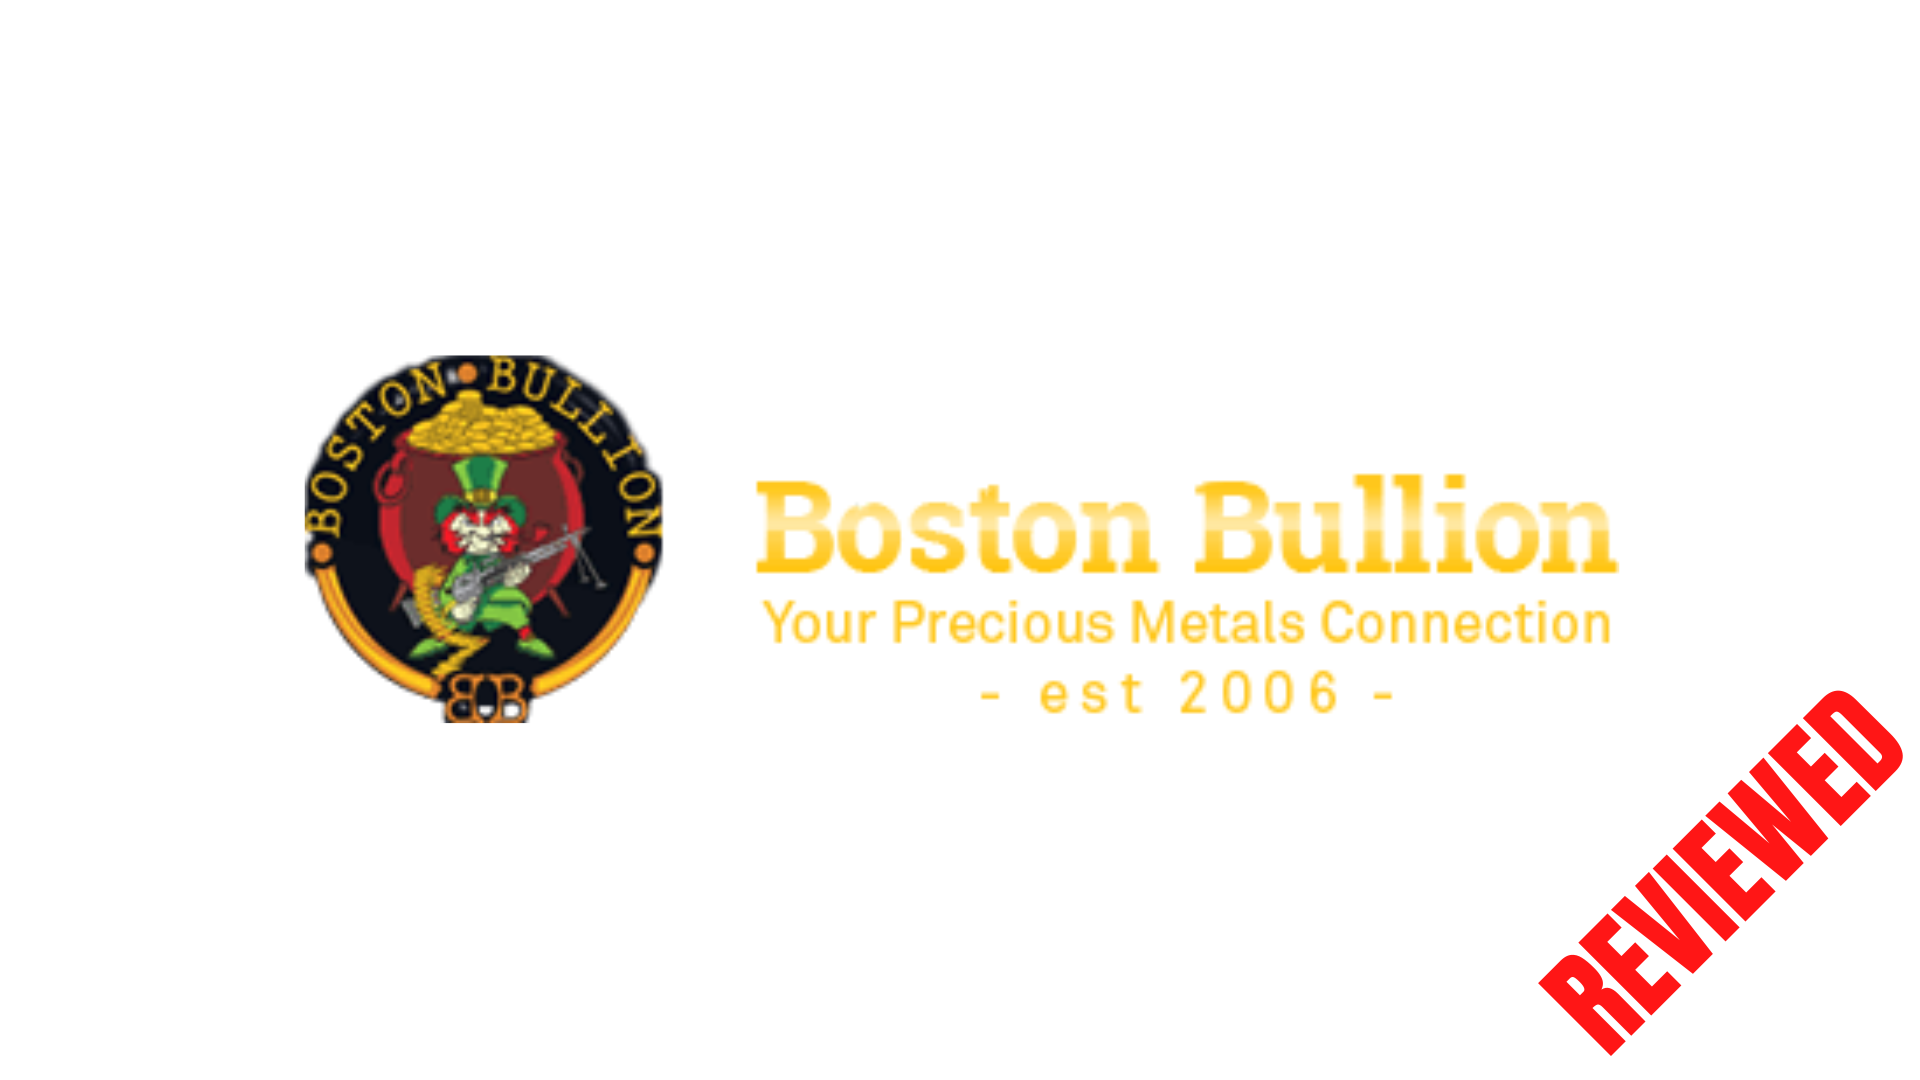 IS BOSTON BULLION A SCAM?